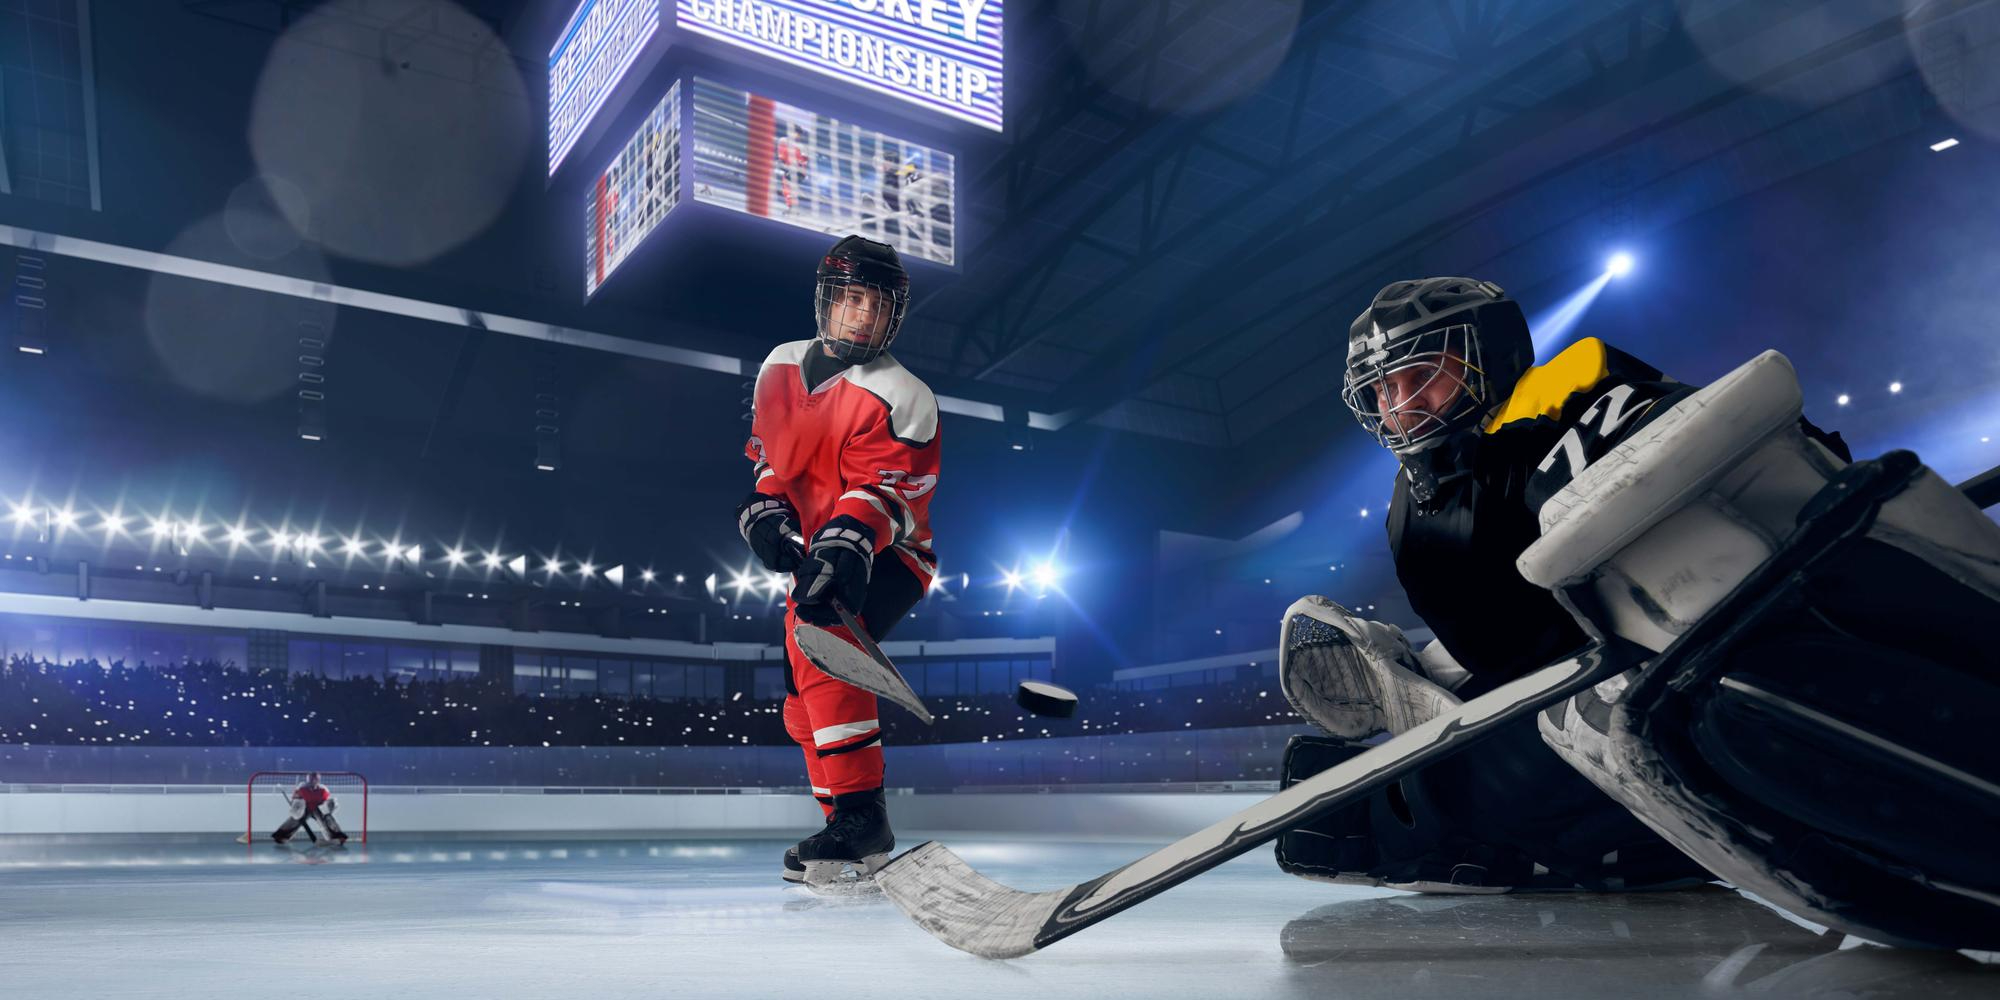 A hockey game in progress | Source: Freepik